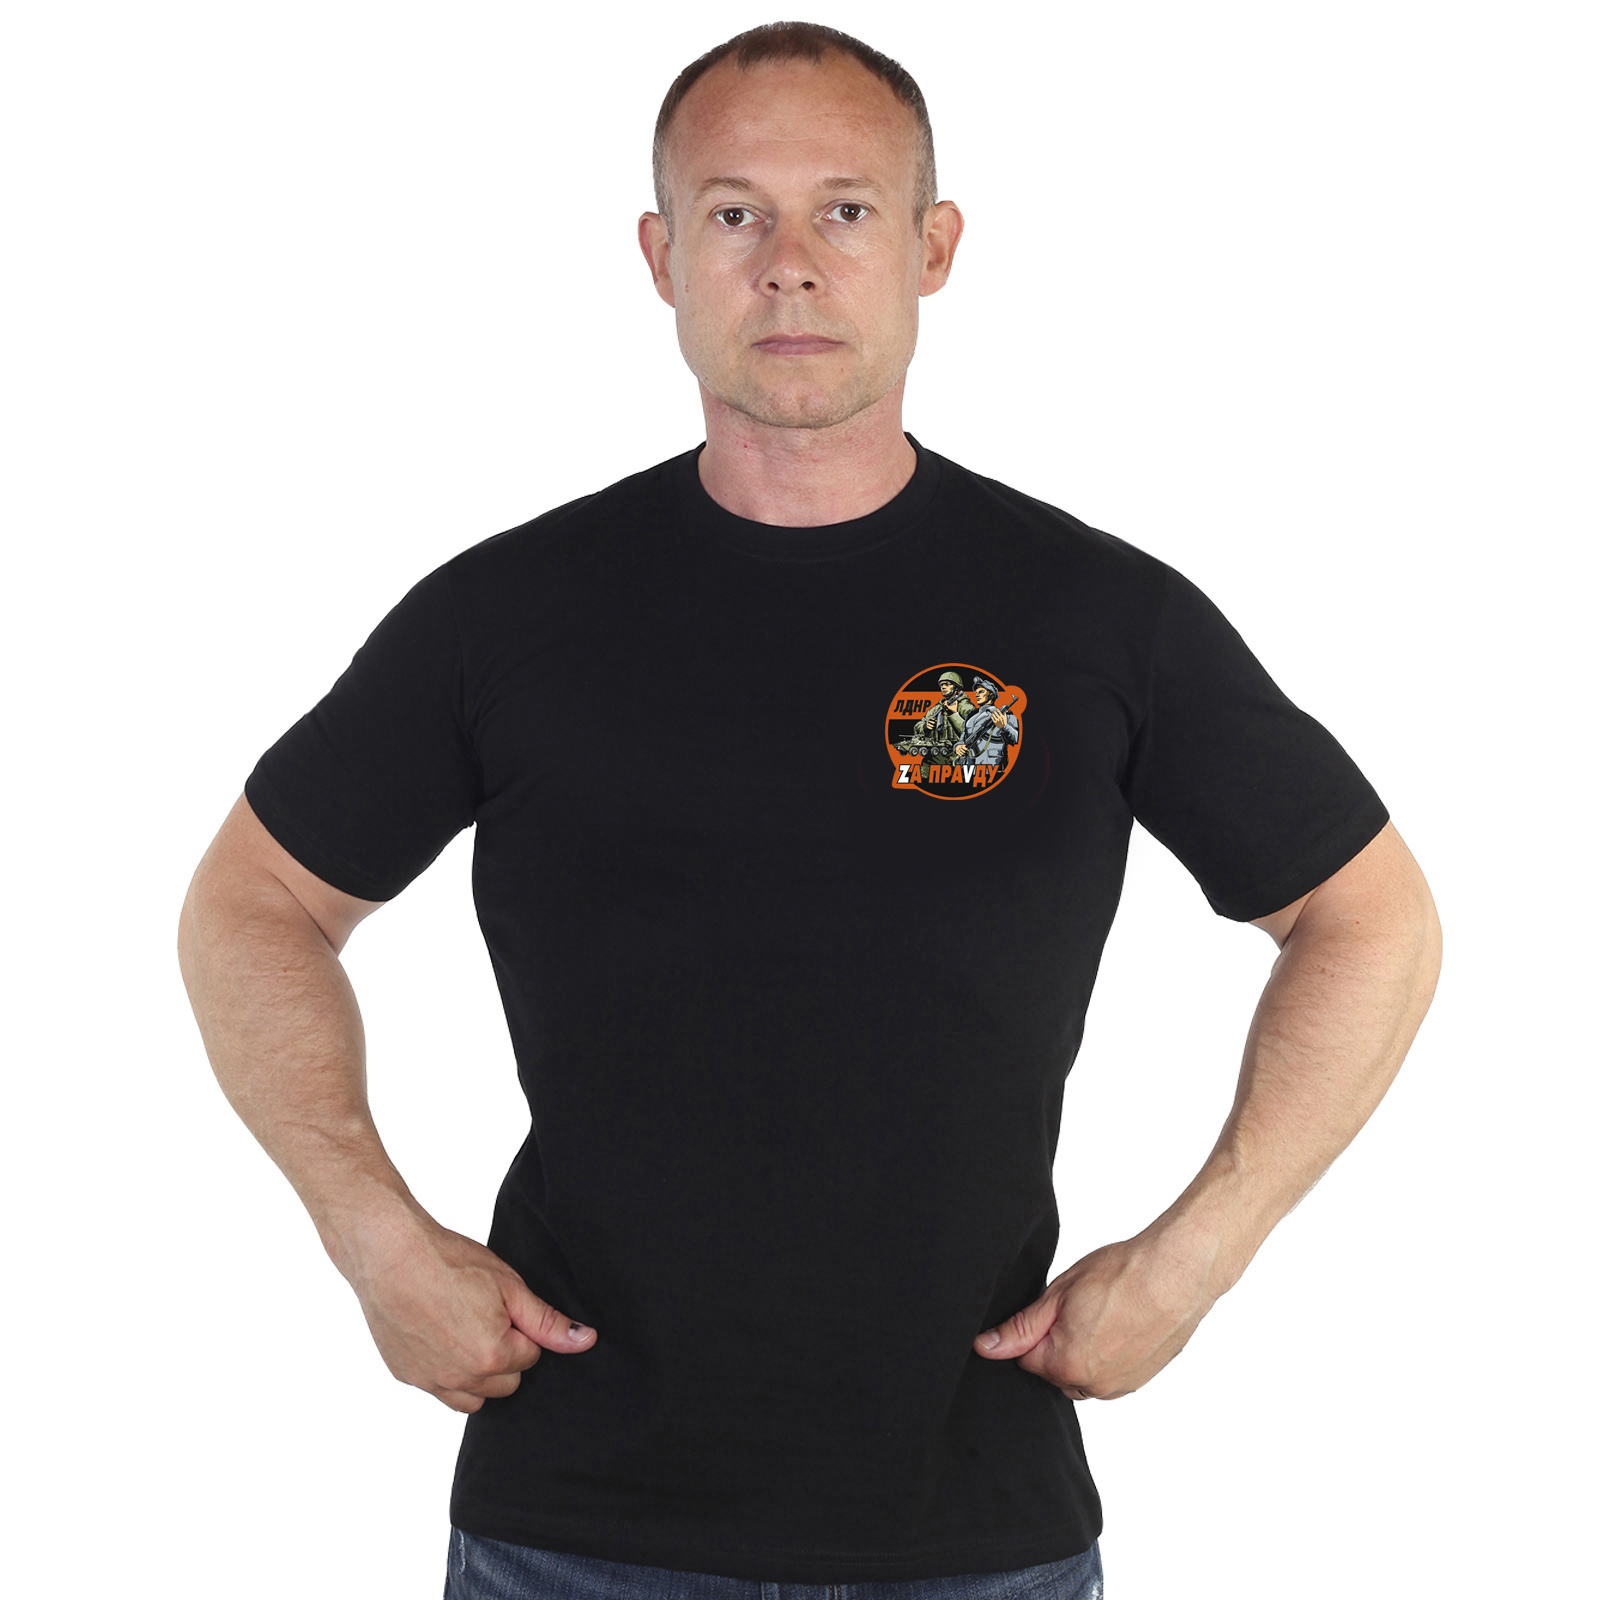 Чёрная футболка с трансфером ЛДНР "Zа праVду"